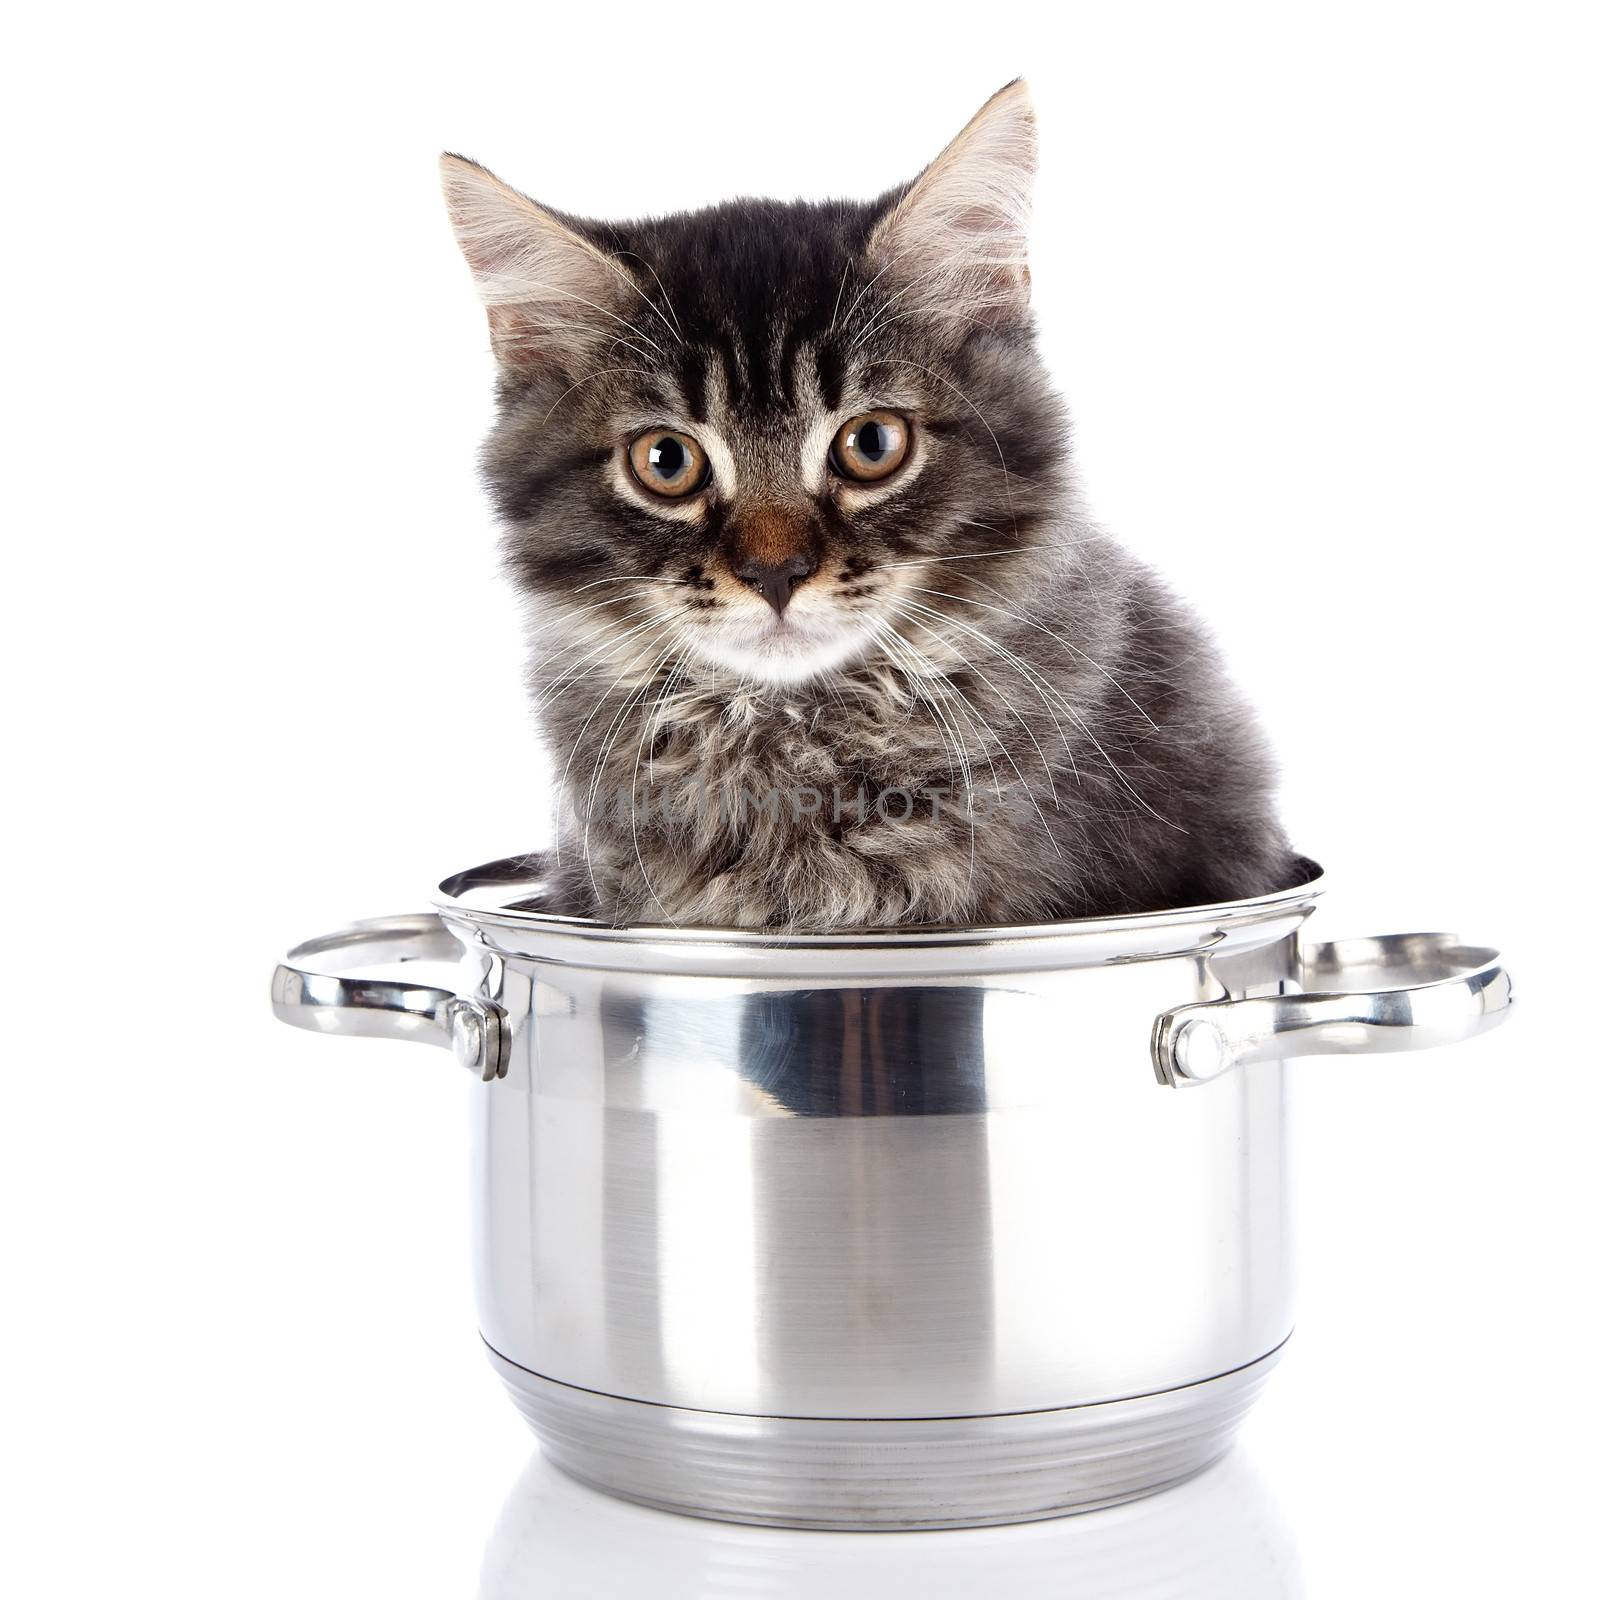 Fluffy cat with brown eyes in a pan. by Azaliya